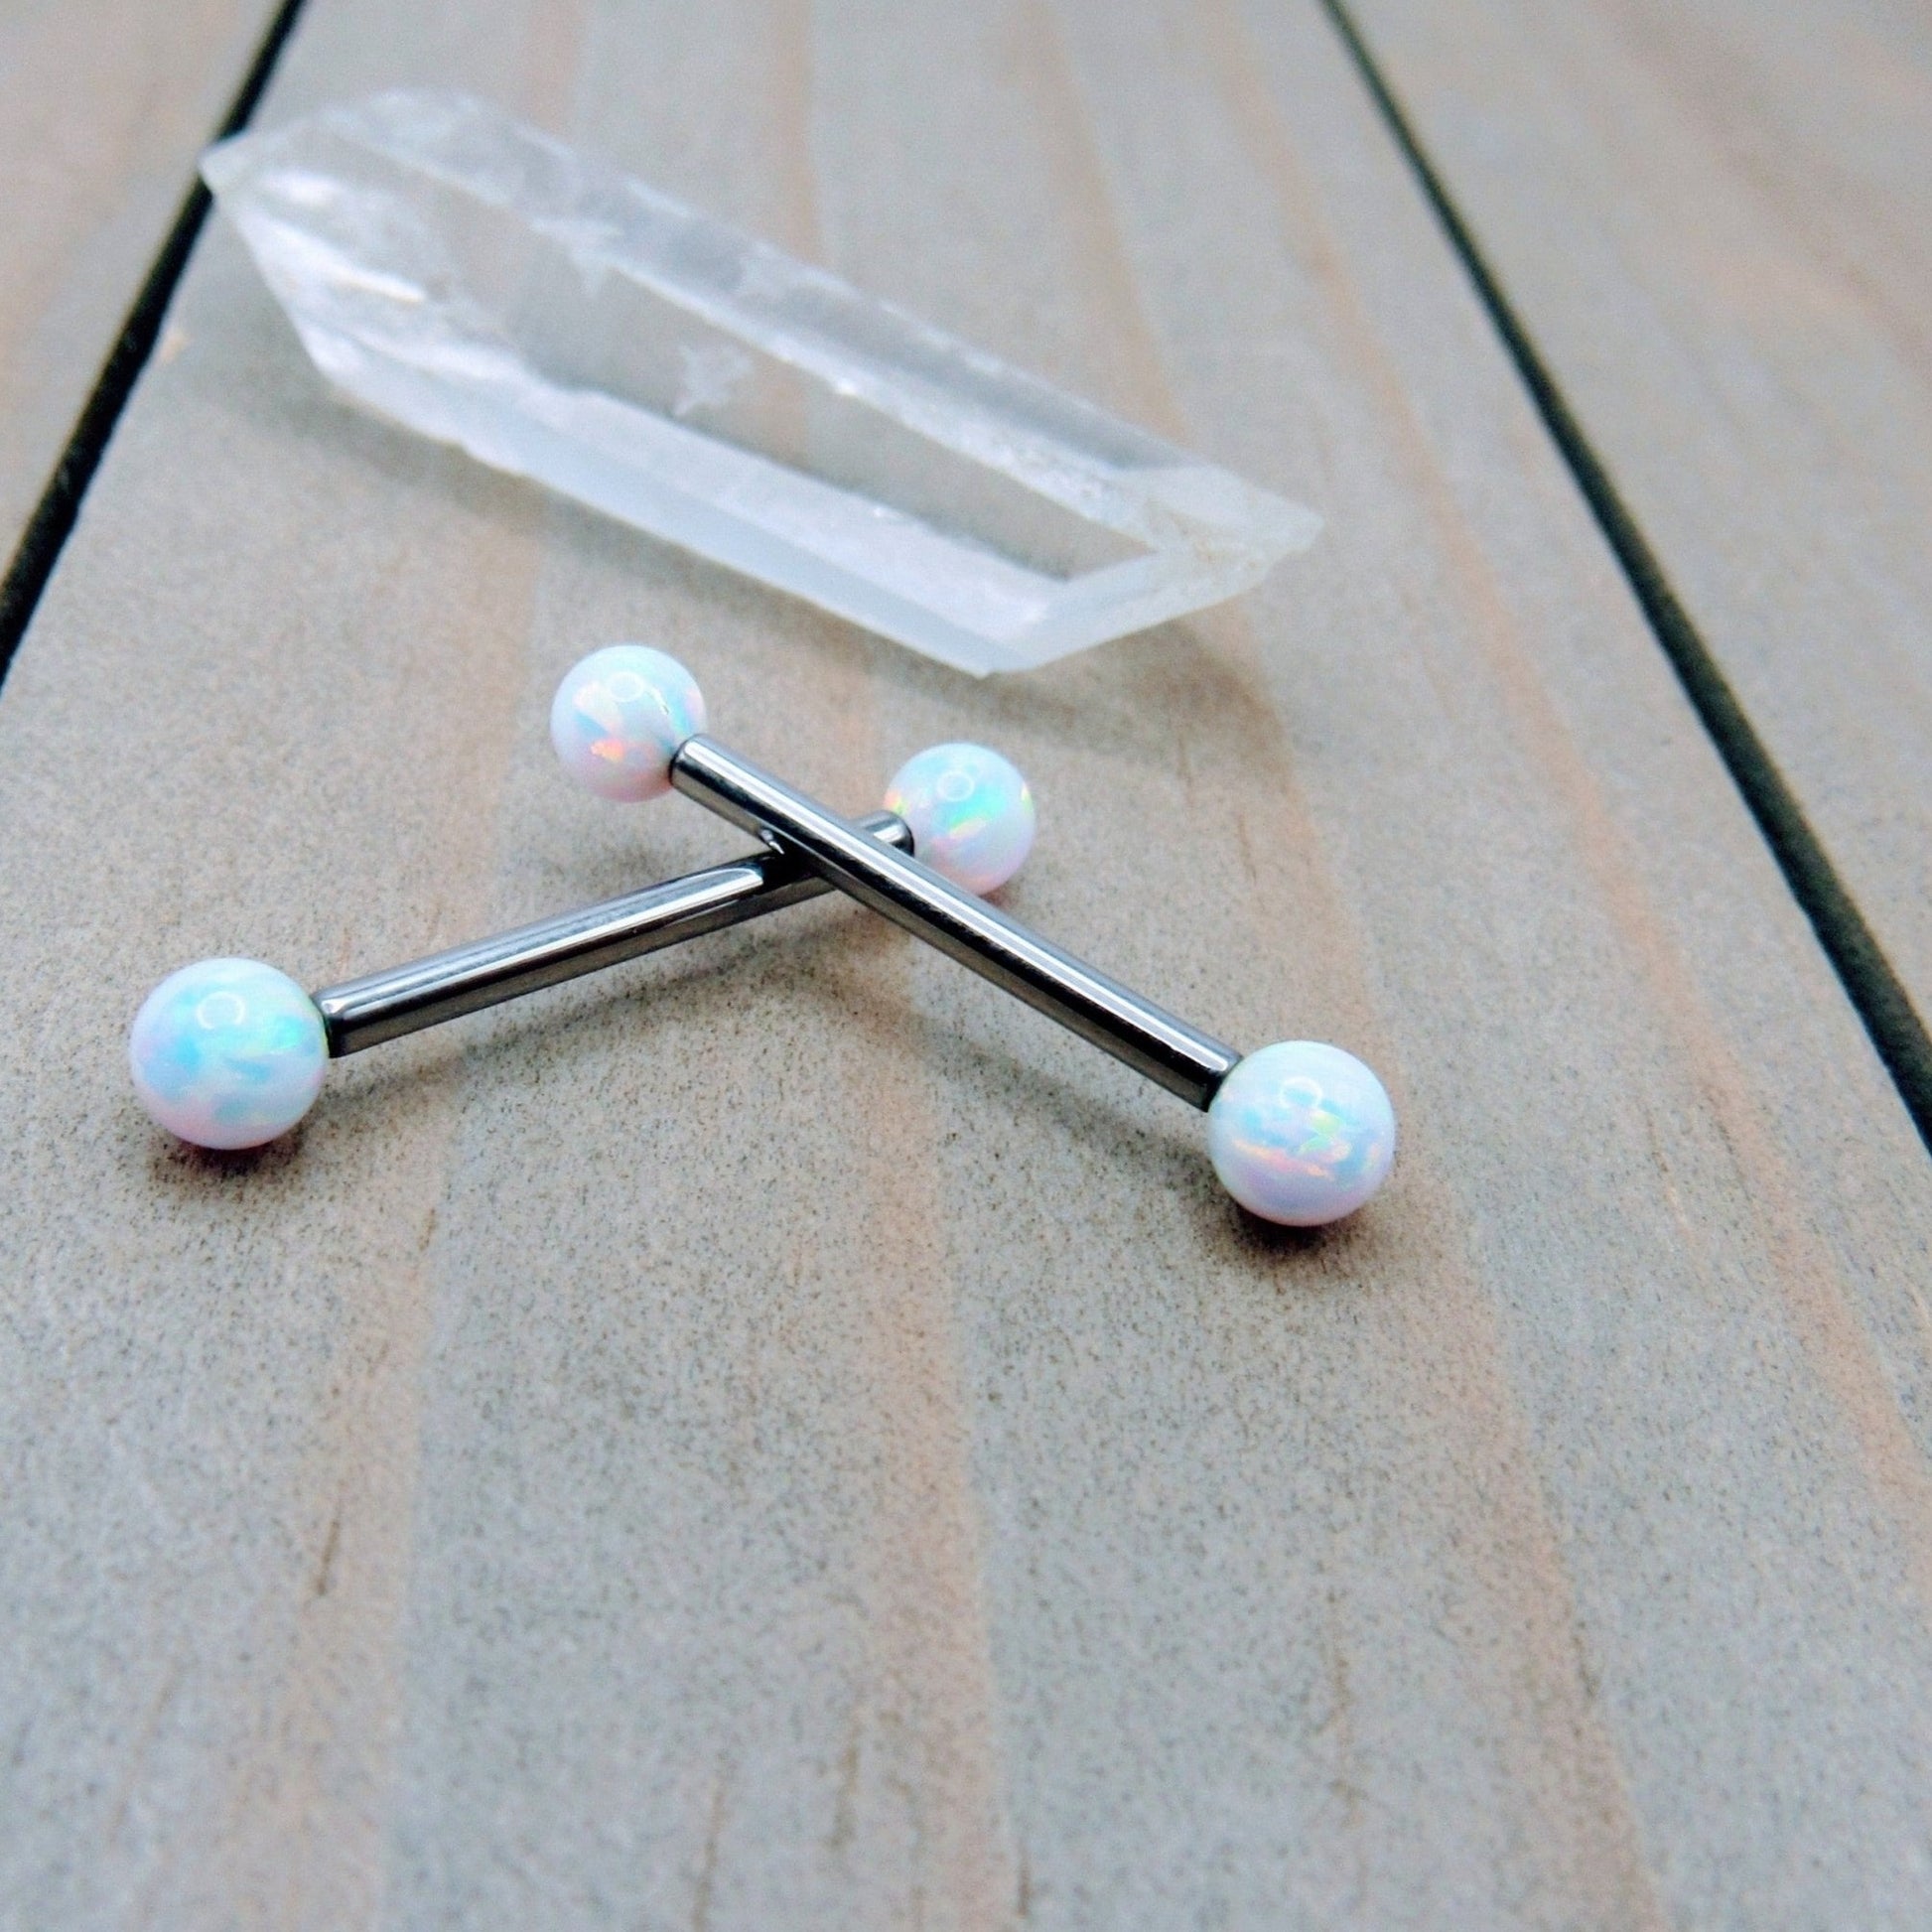 14g 4mm white opal nipple piercing barbell jewelry